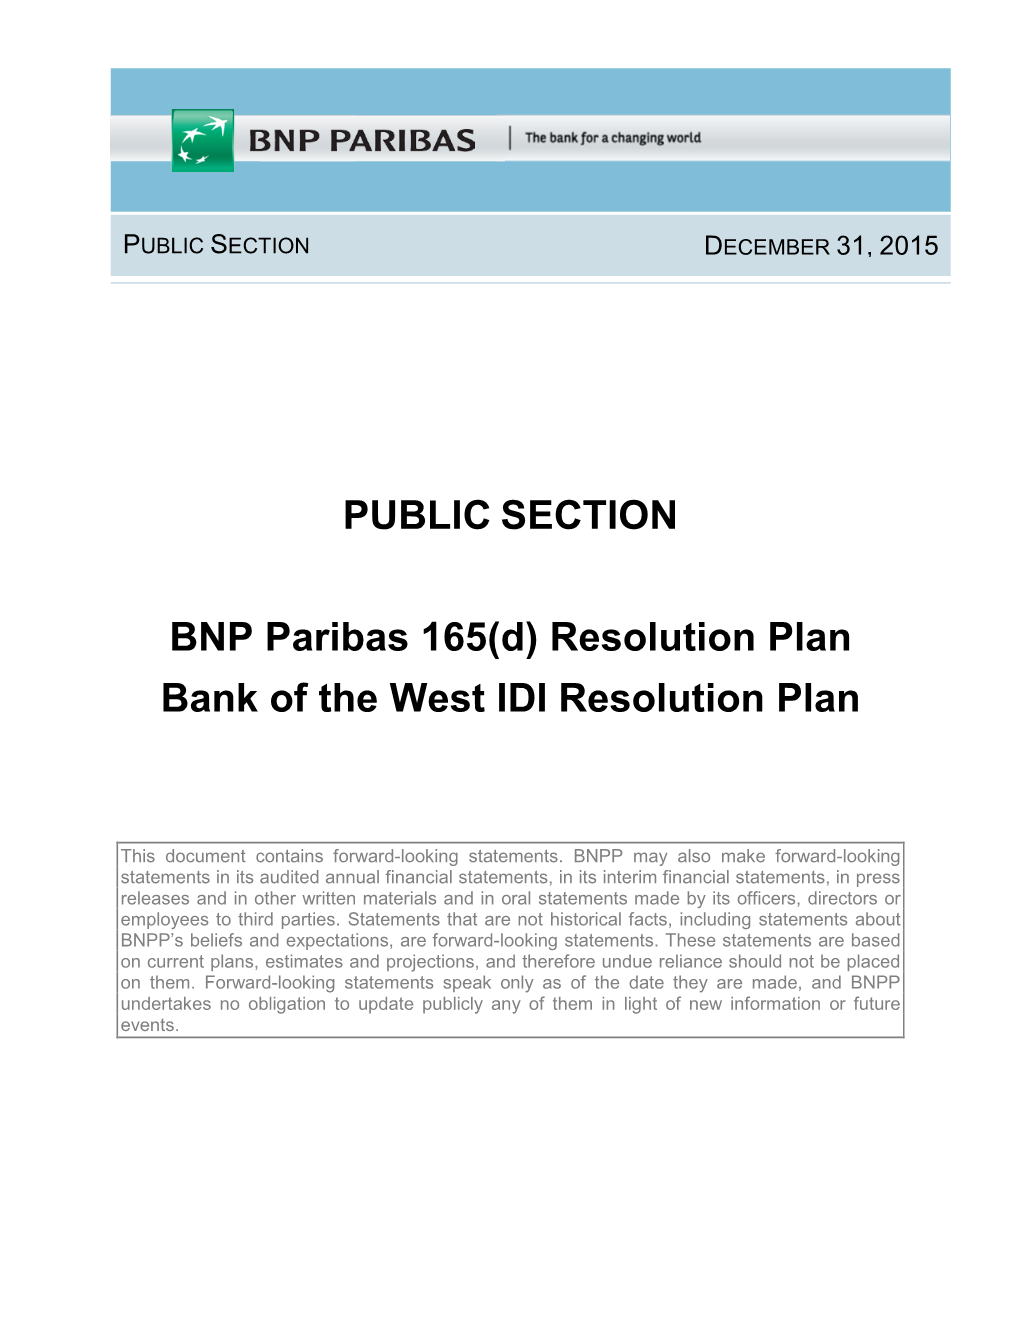 BNP Paribas 165(D) Resolution Plan Bank of the West IDI Resolution Plan